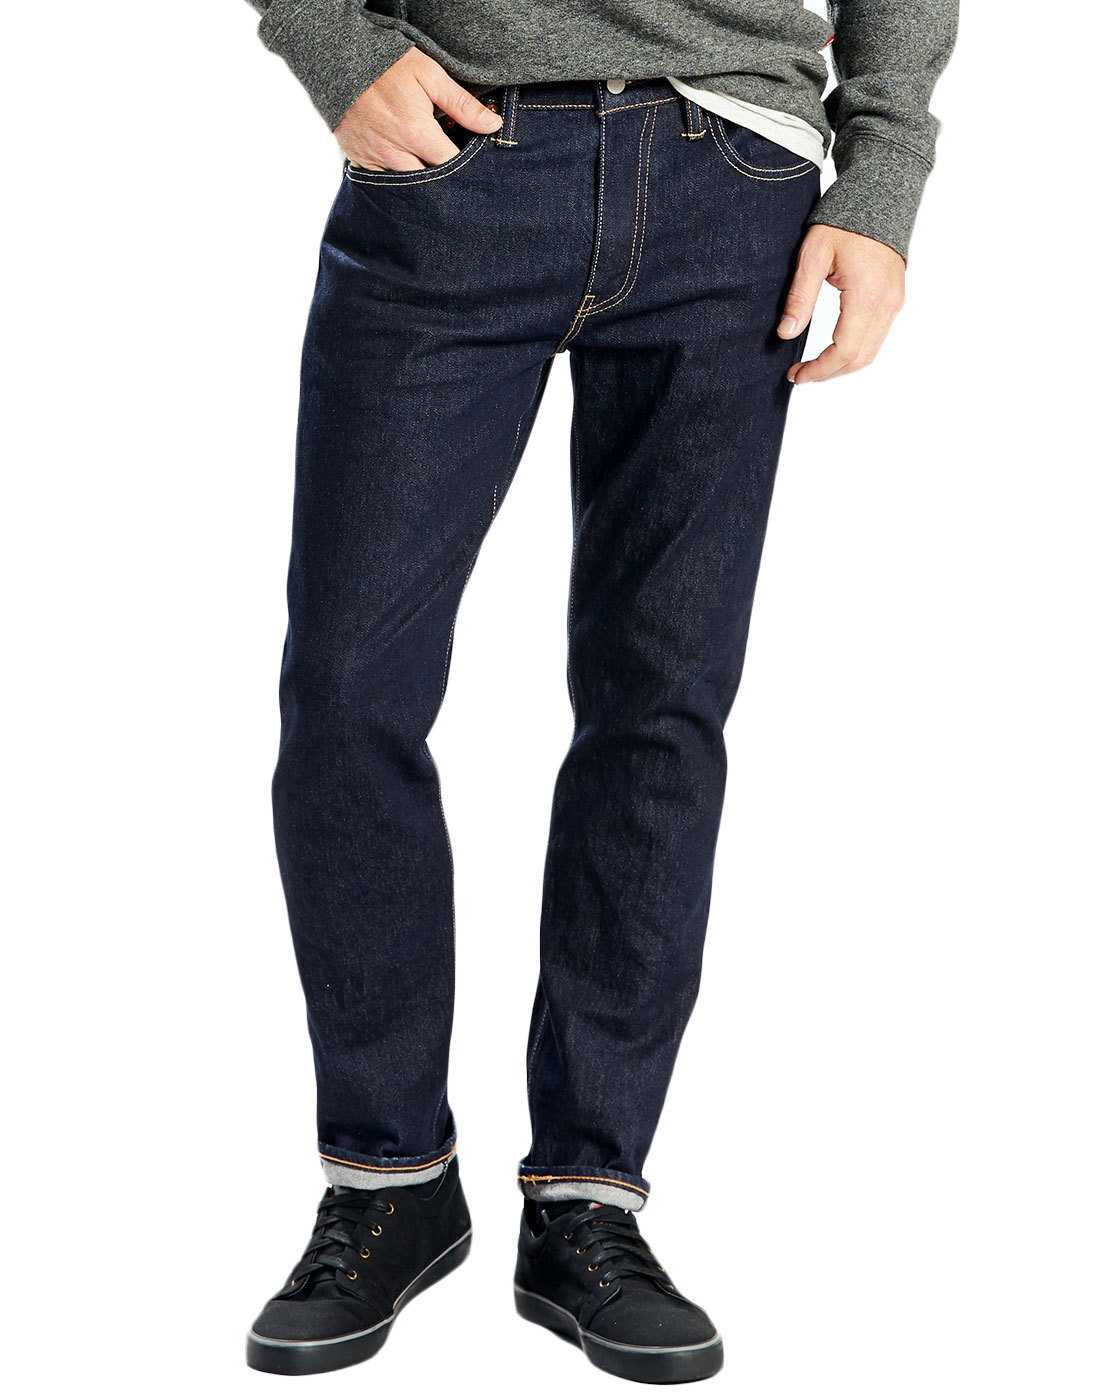 LEVI'S® 502 Retro Mod Regular Tapered Jeans in Rinse Denim.